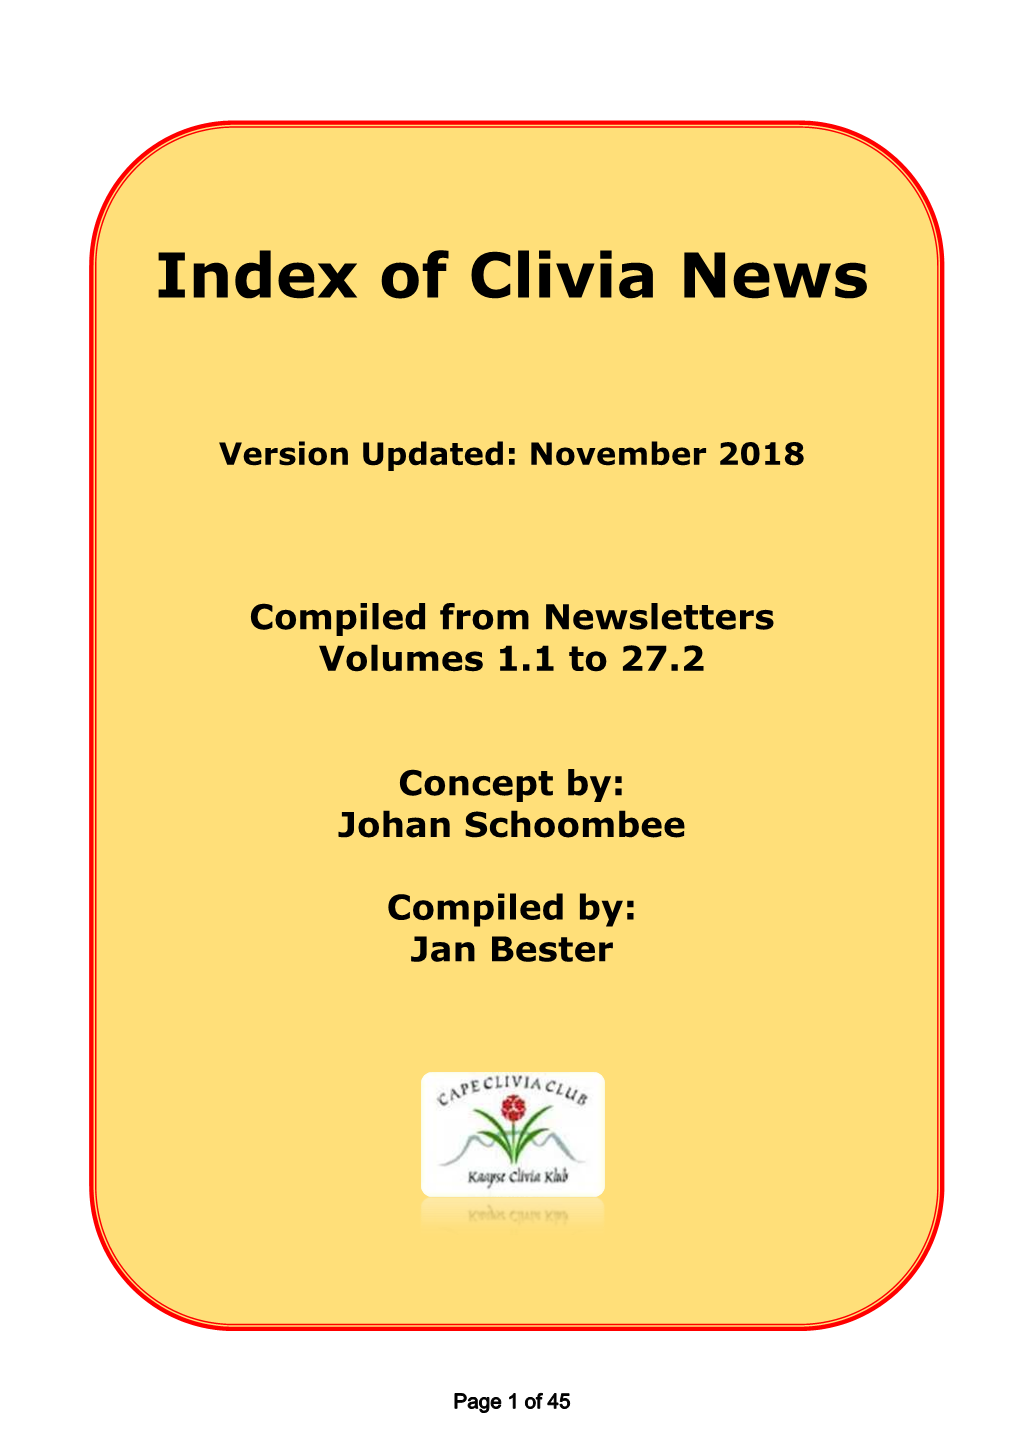 Of Clivia News